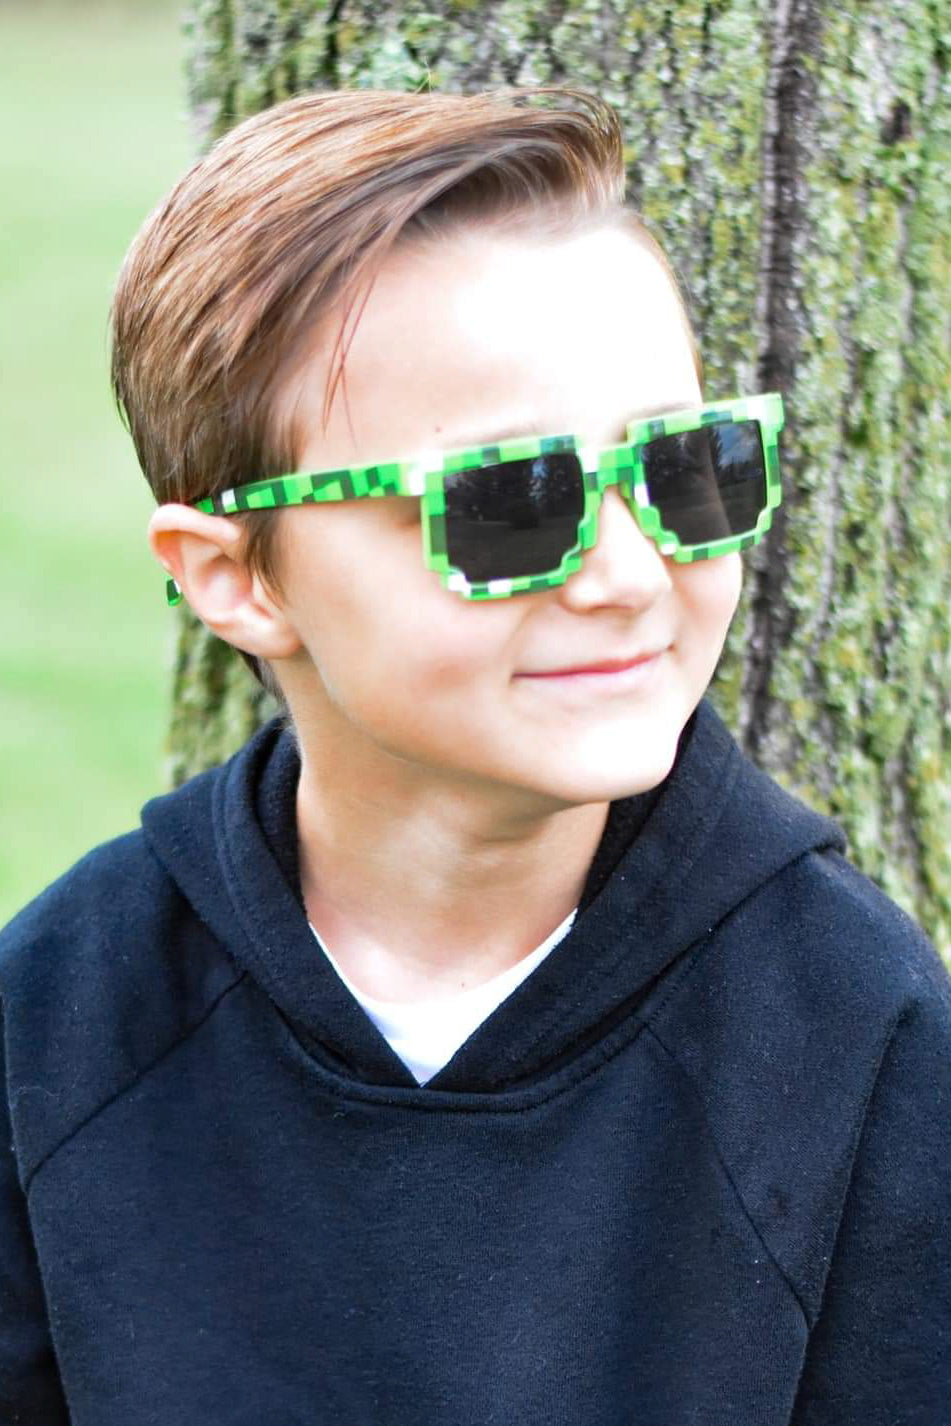 [Minecraft Inspired] Sunglasses